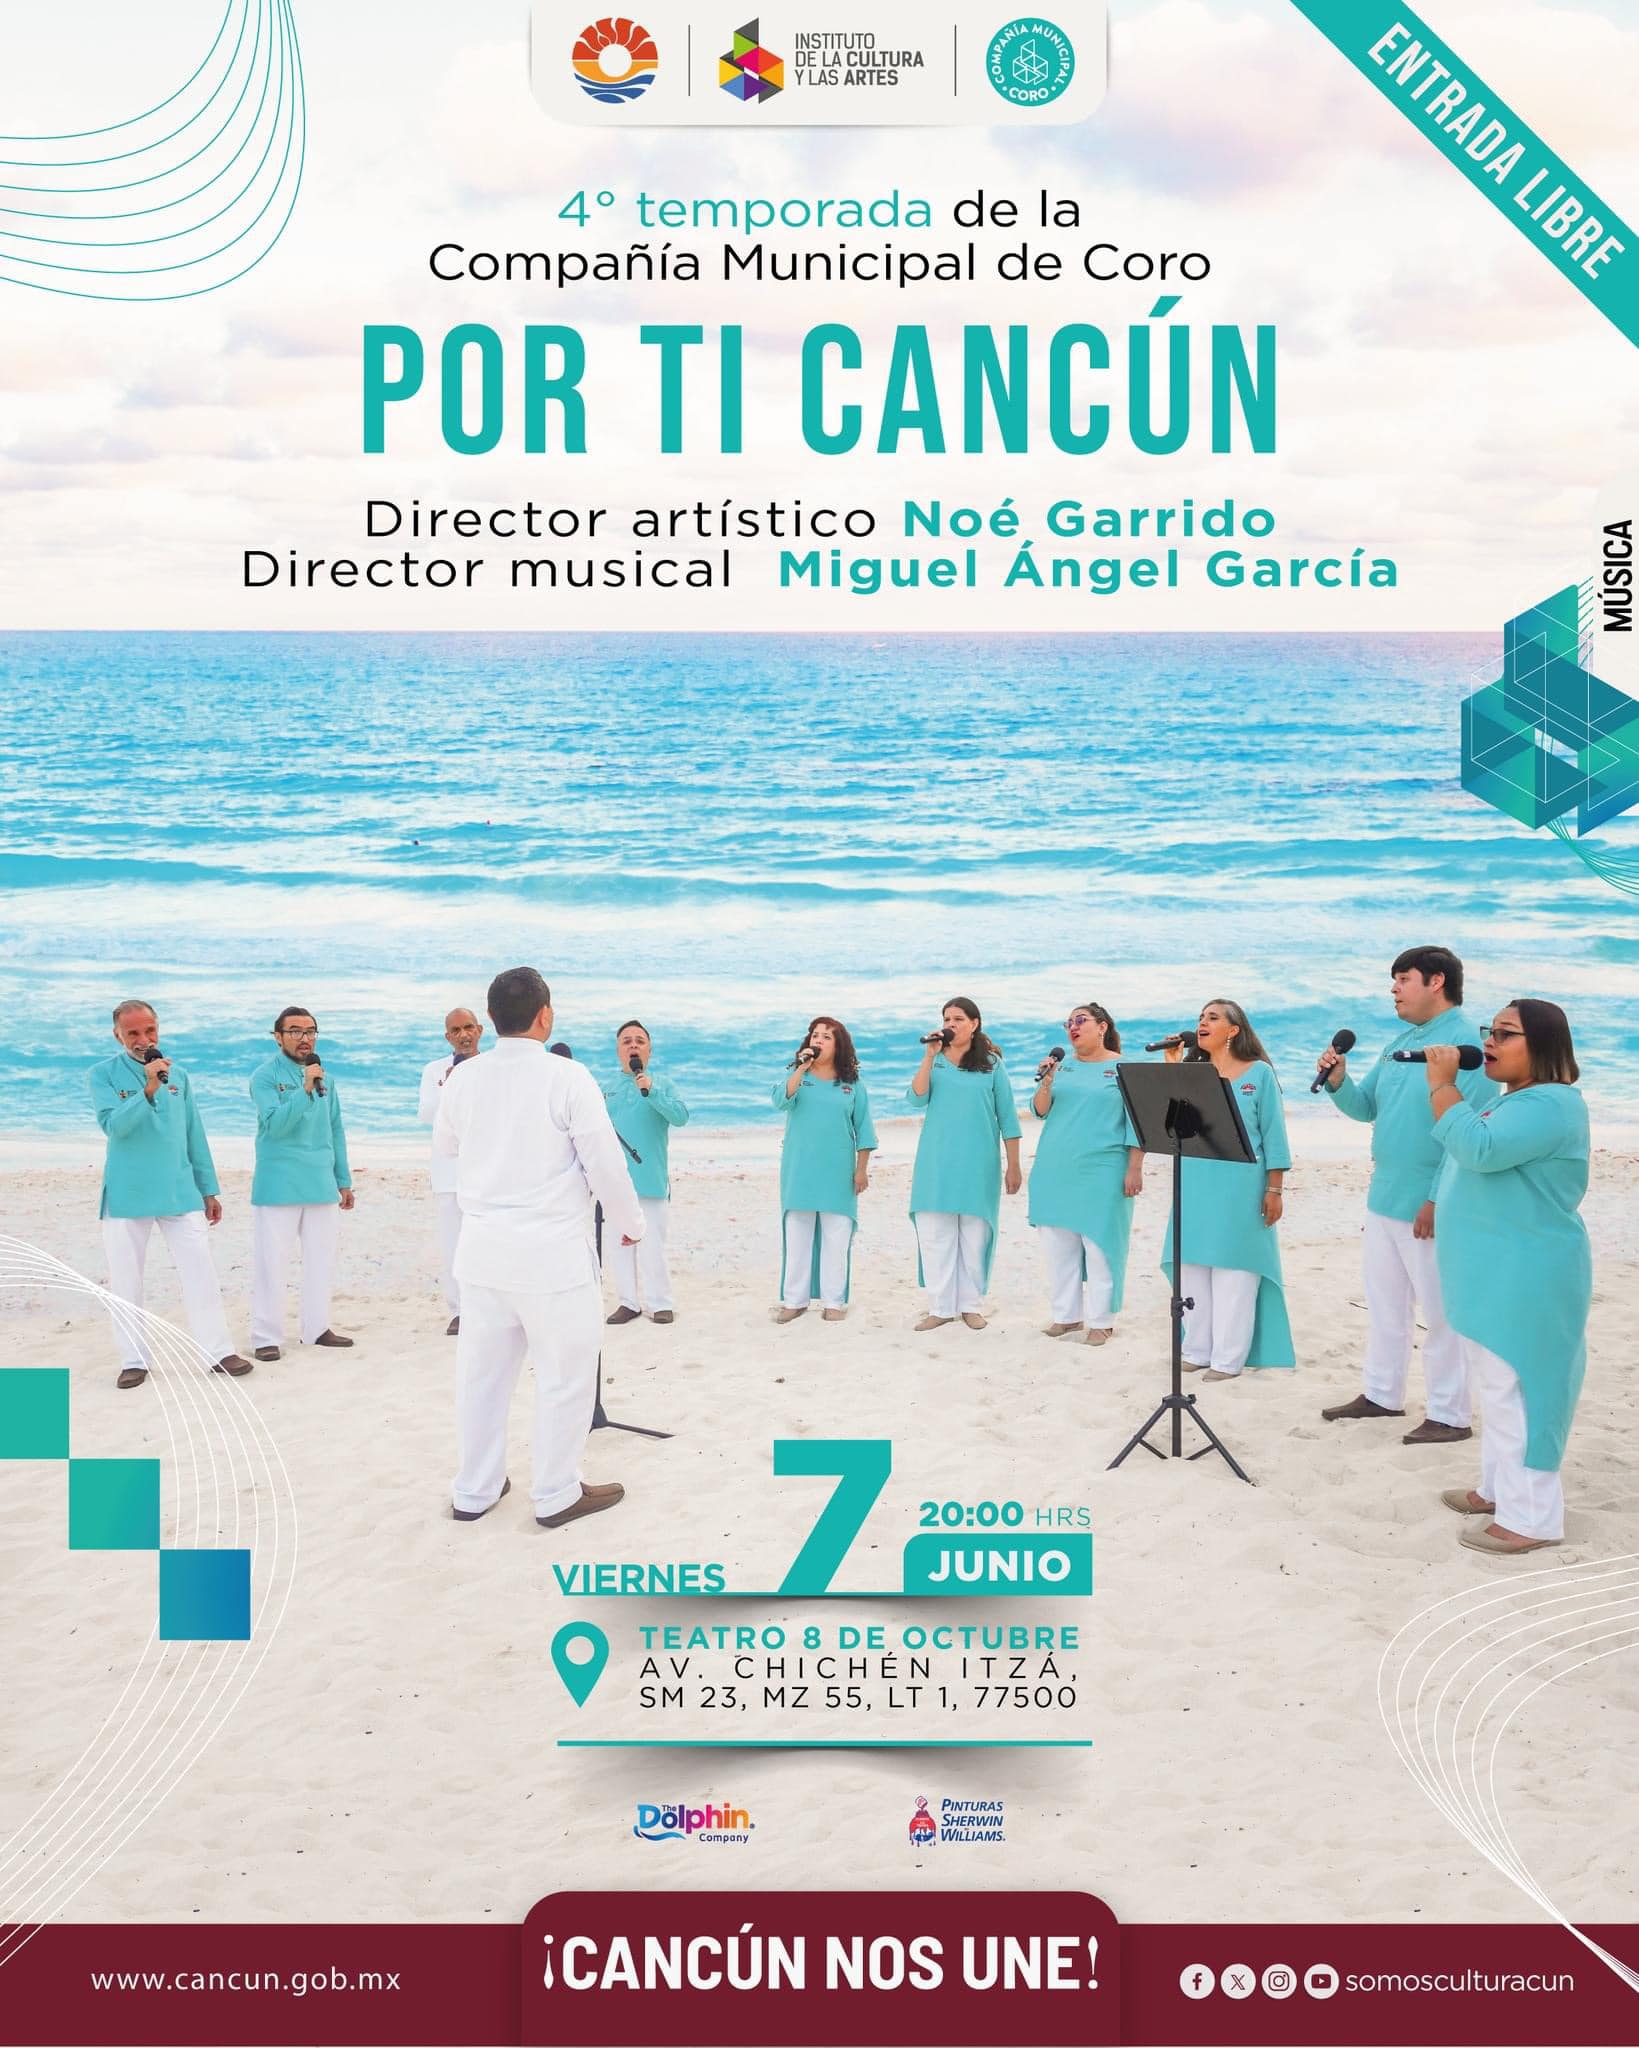 Por tí Cancún image